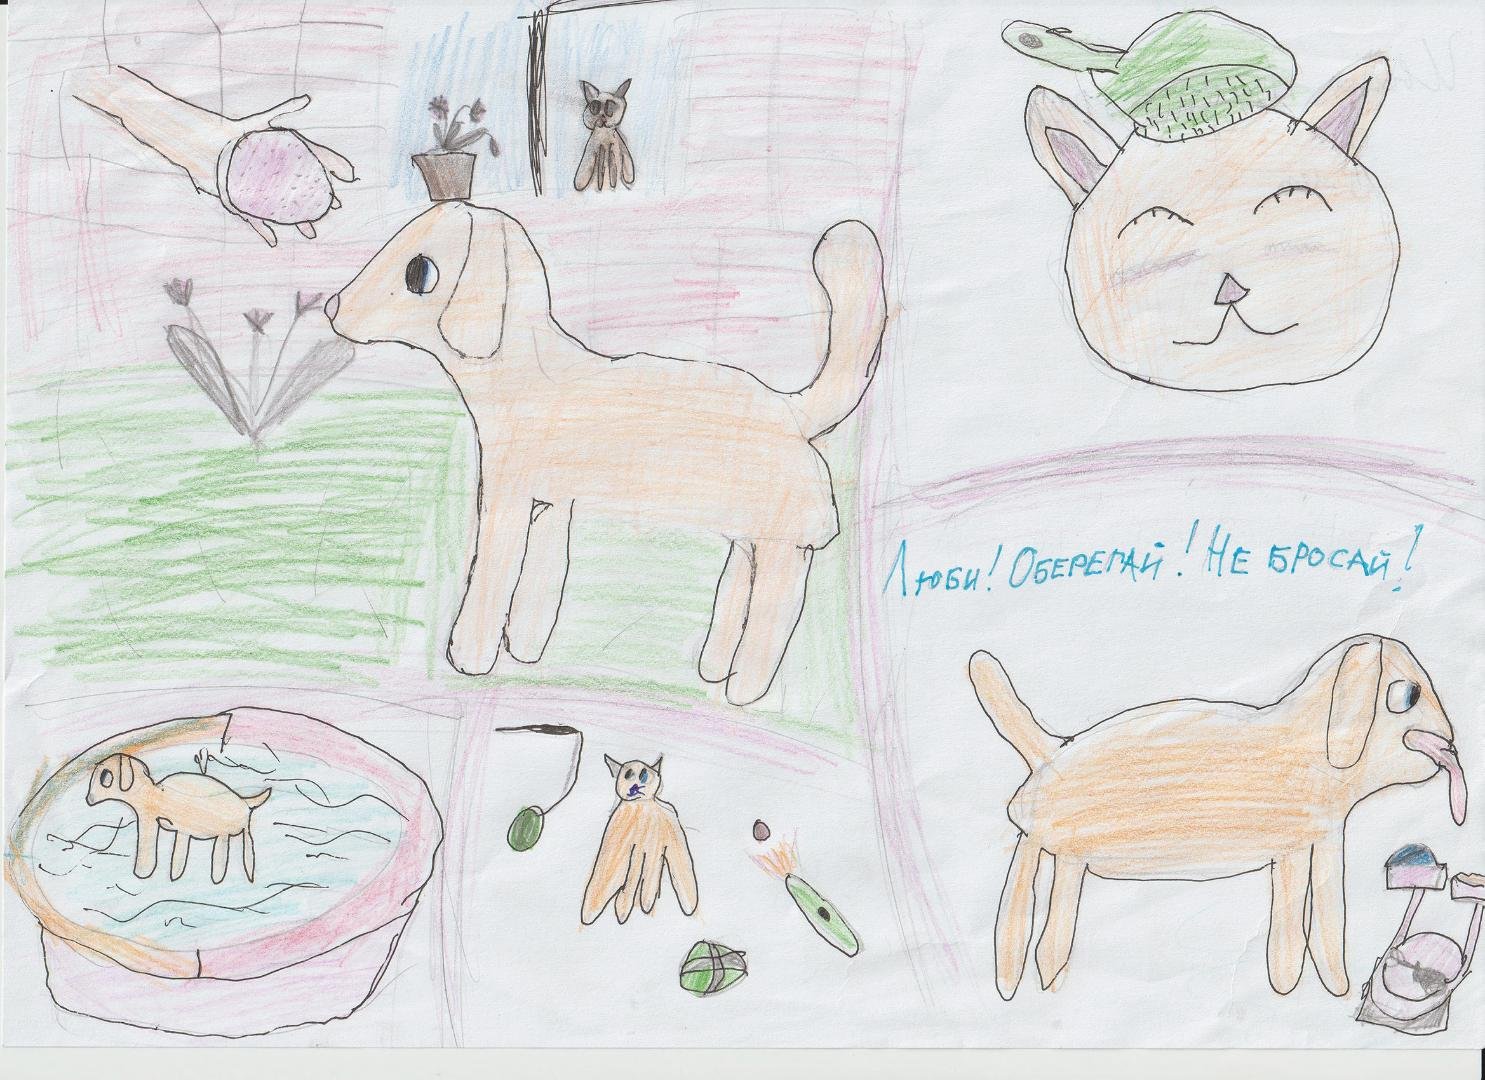 Конкурс рисунков про бездомных животных